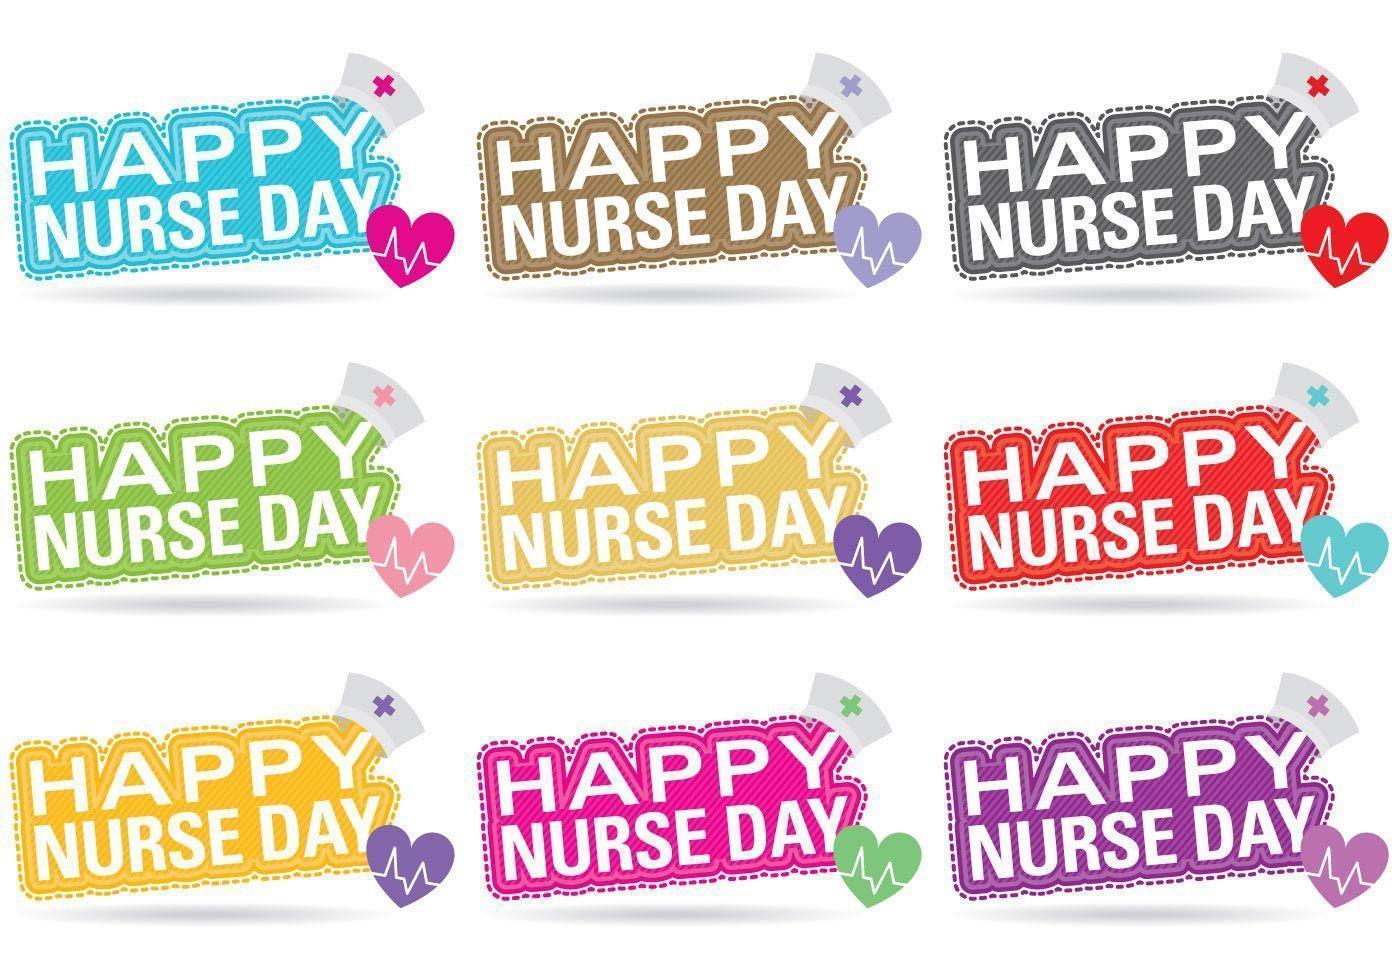 Nurses Day Wallpaper Free Download